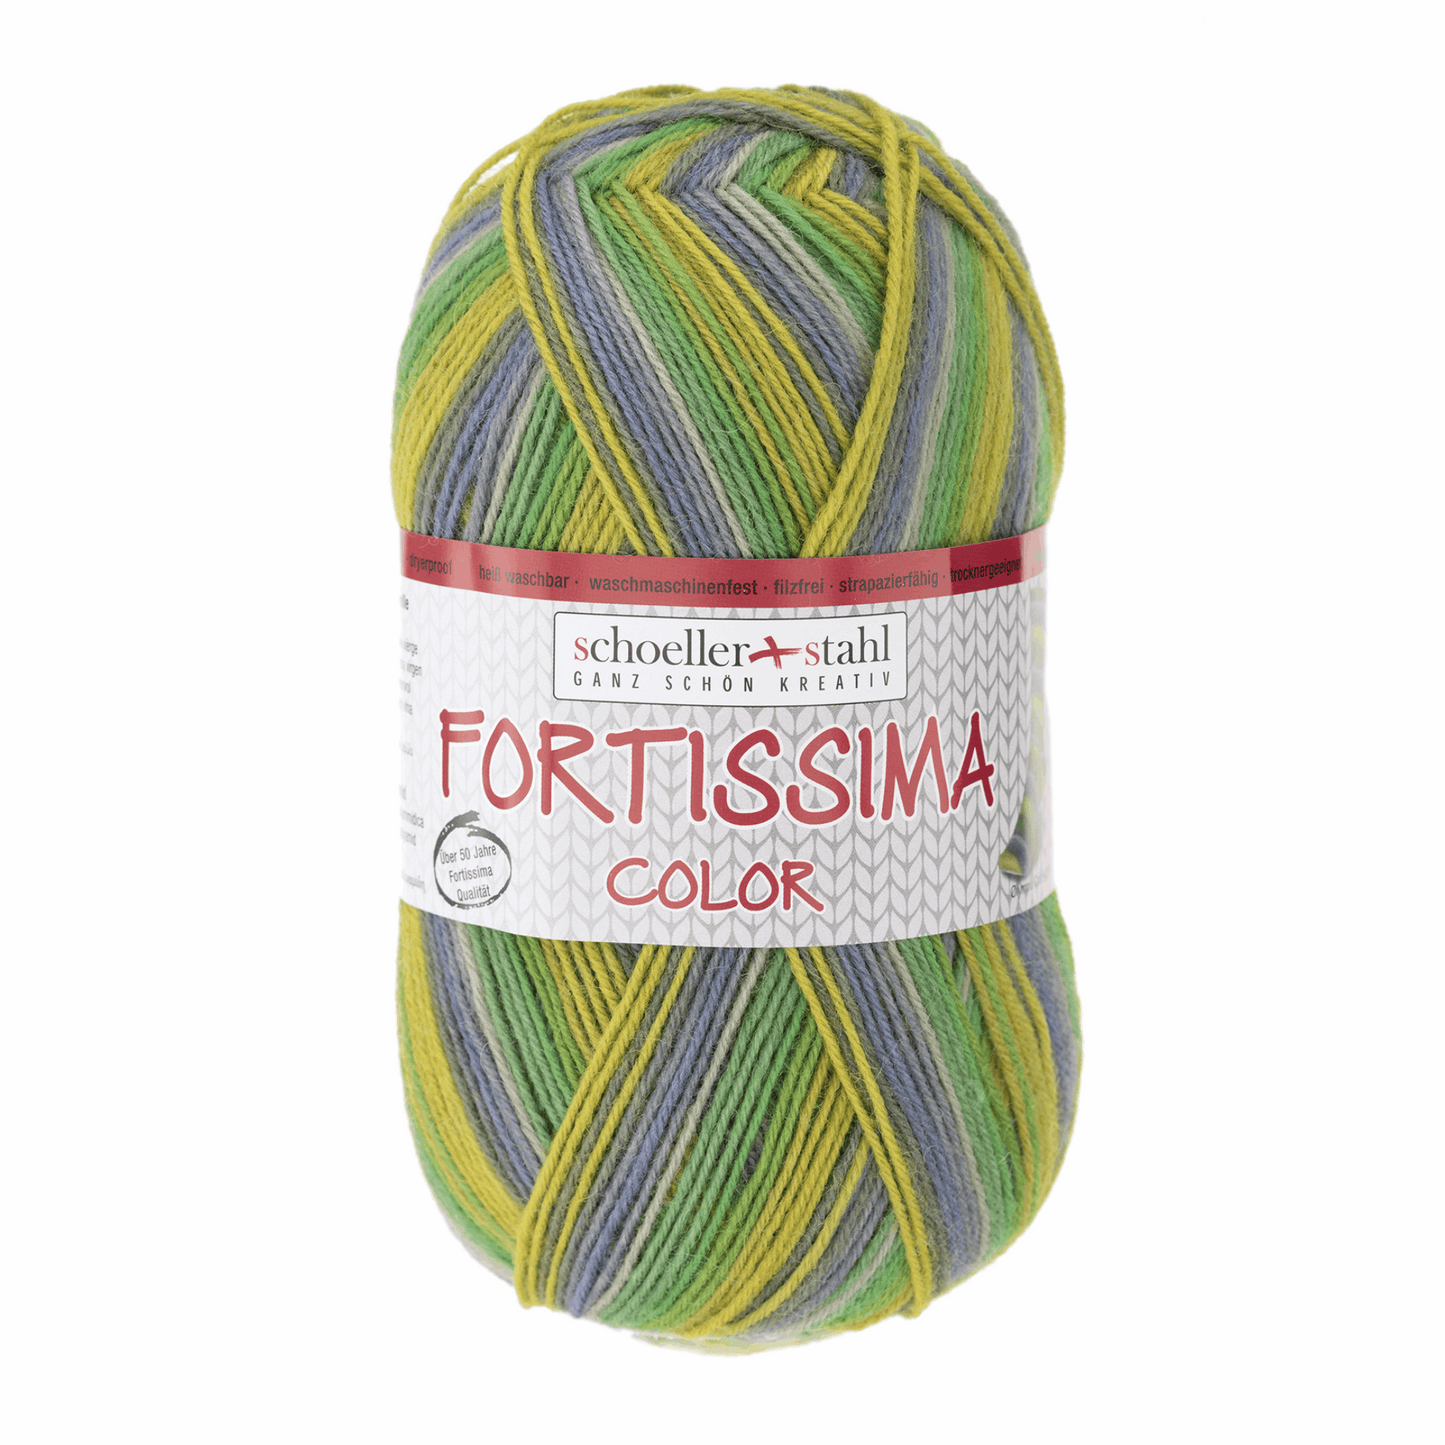 Fortissima socka 4fädrig color, 90028, Farbe 2429, kawagoe